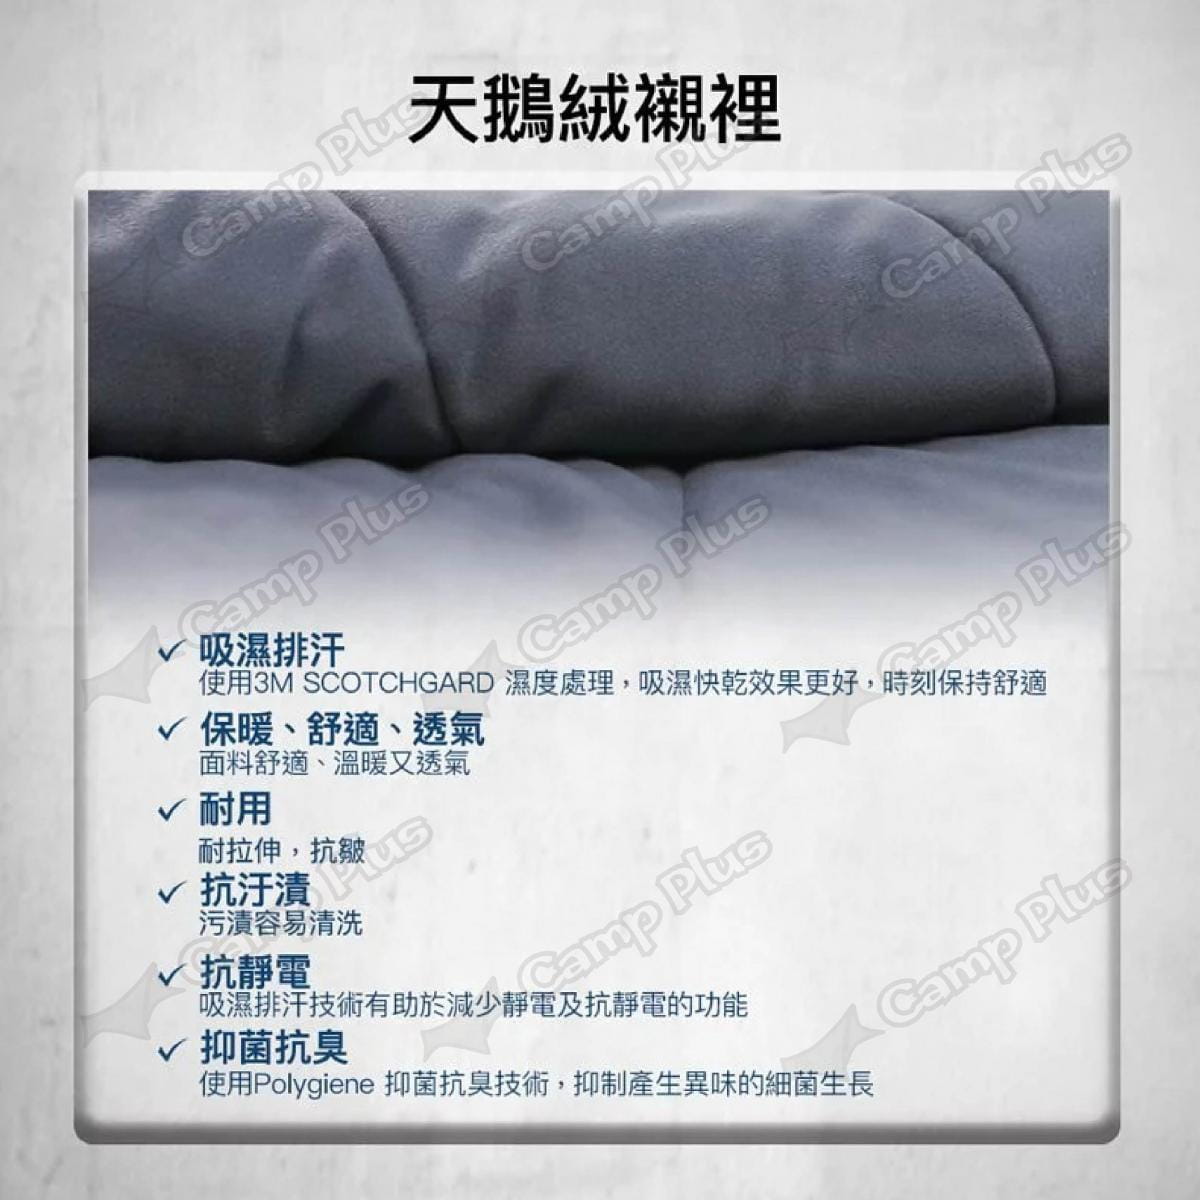 【LITUME】意都美 FENC® Insulate 科技棉睡袋 C062藍綠 悠遊戶外 5